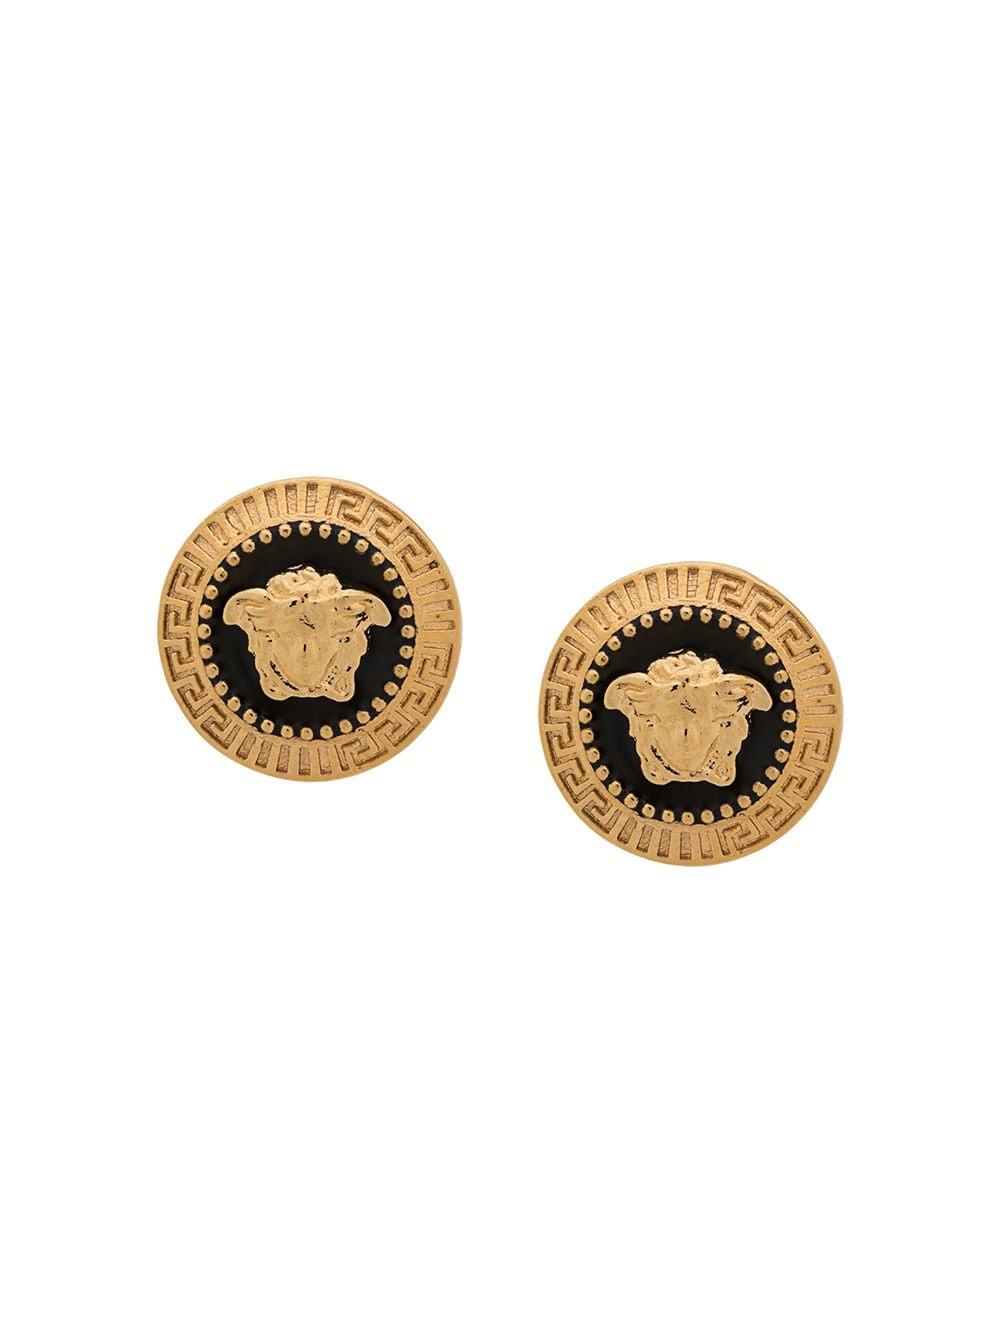 Versace Icon Medusa Cufflinks in Gold (Metallic) for Men - Save 59% | Lyst